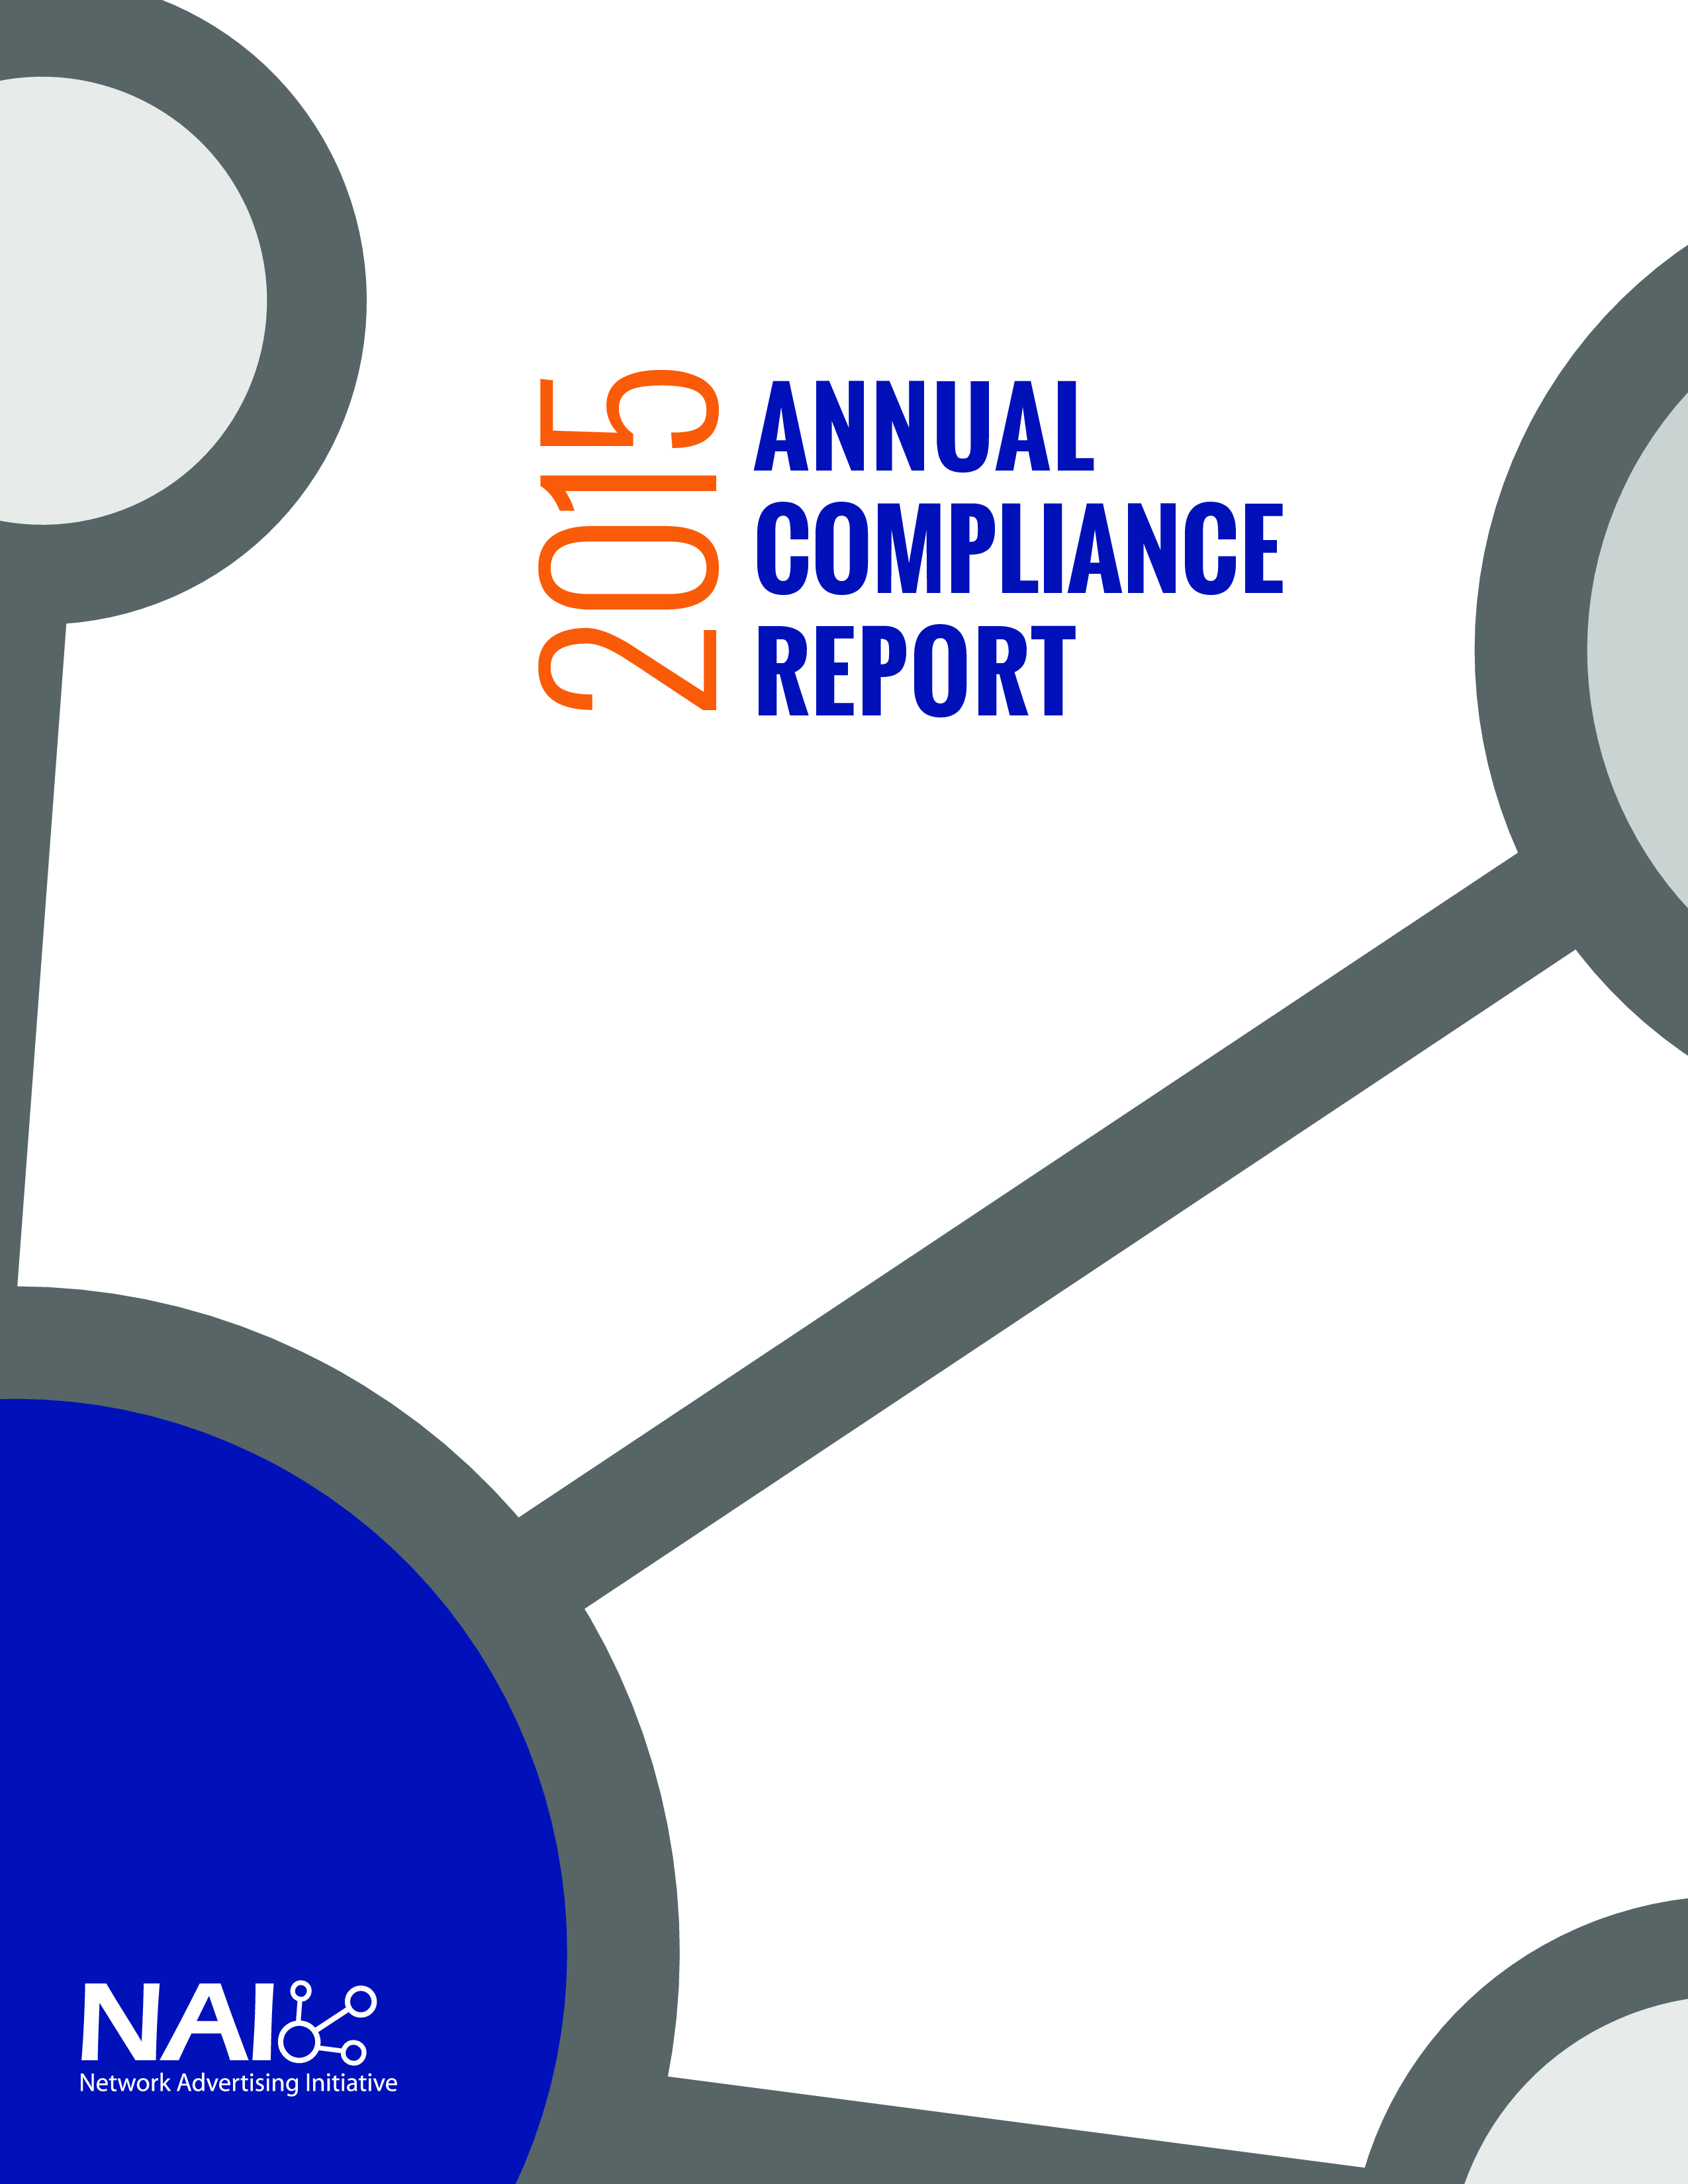 Annual Compliance main image